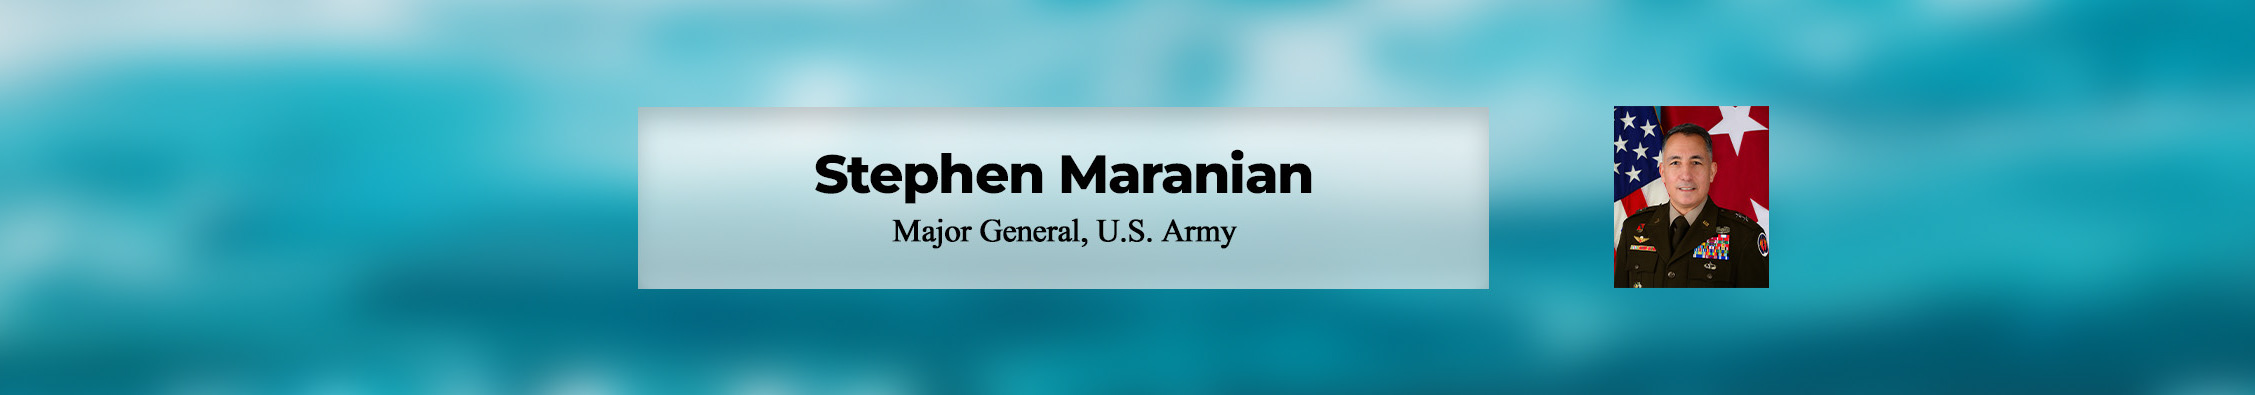 Stephen Maranian's profile banner